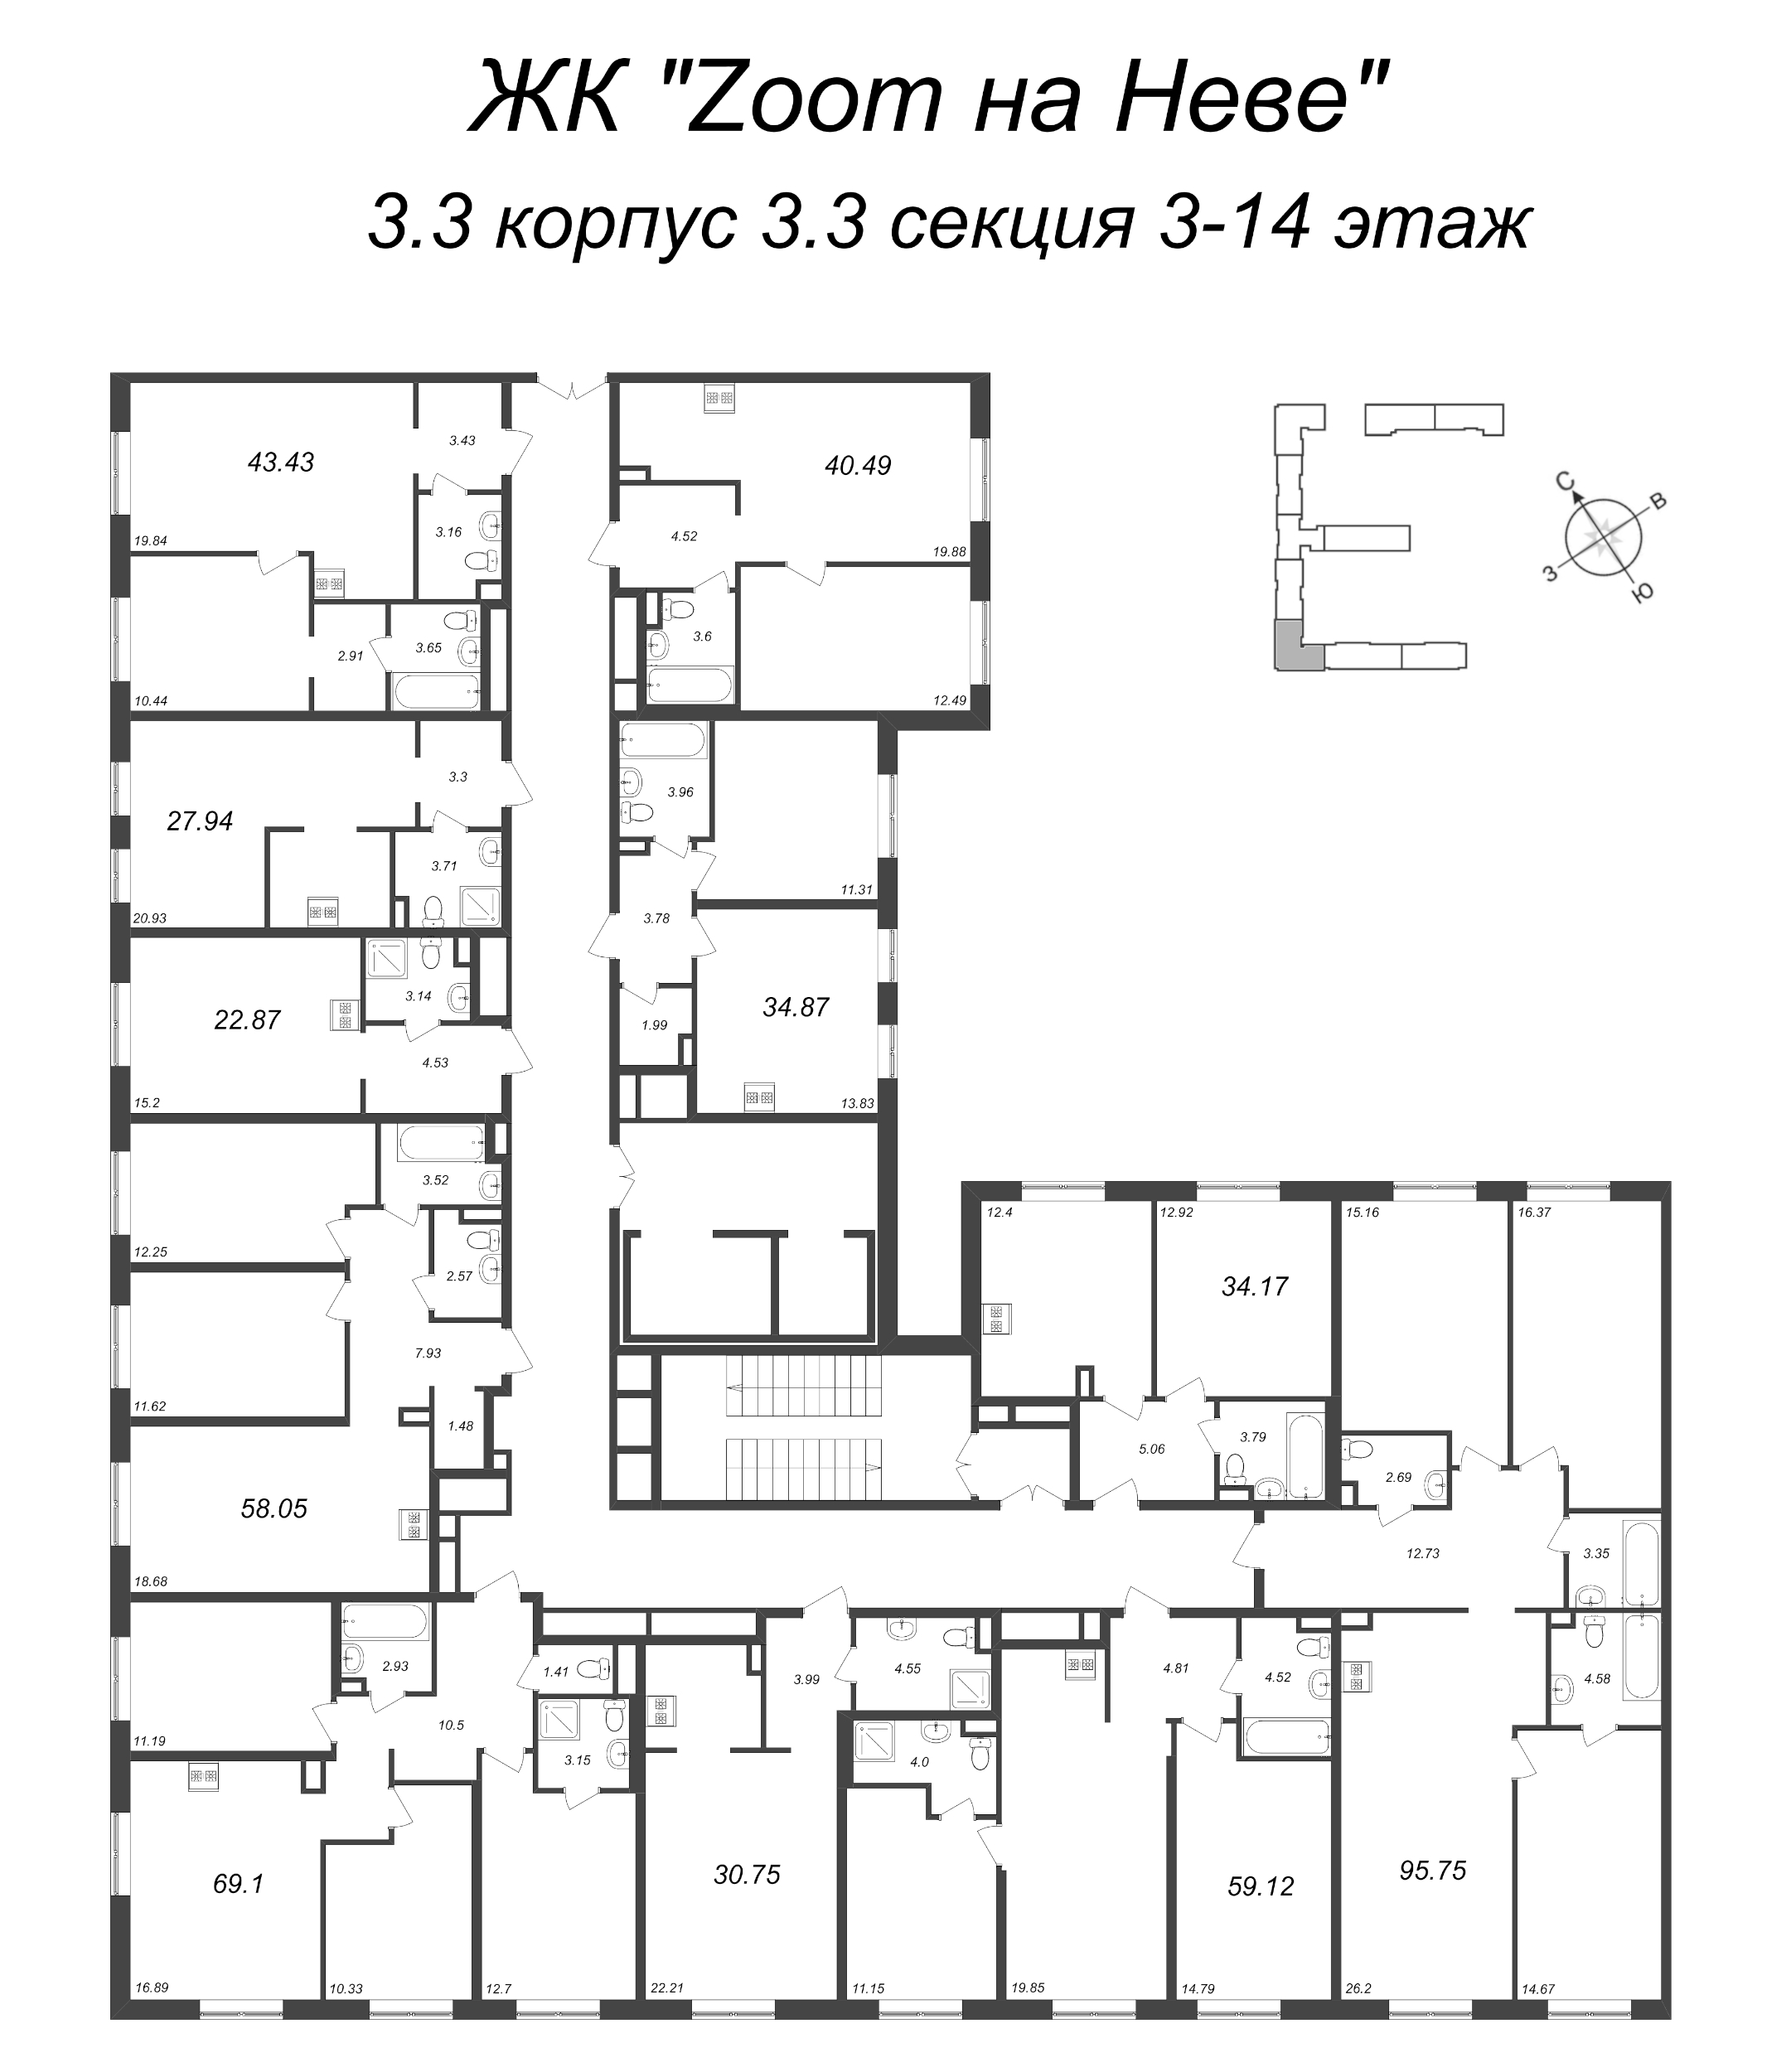 2-комнатная (Евро) квартира, 40.13 м² - планировка этажа